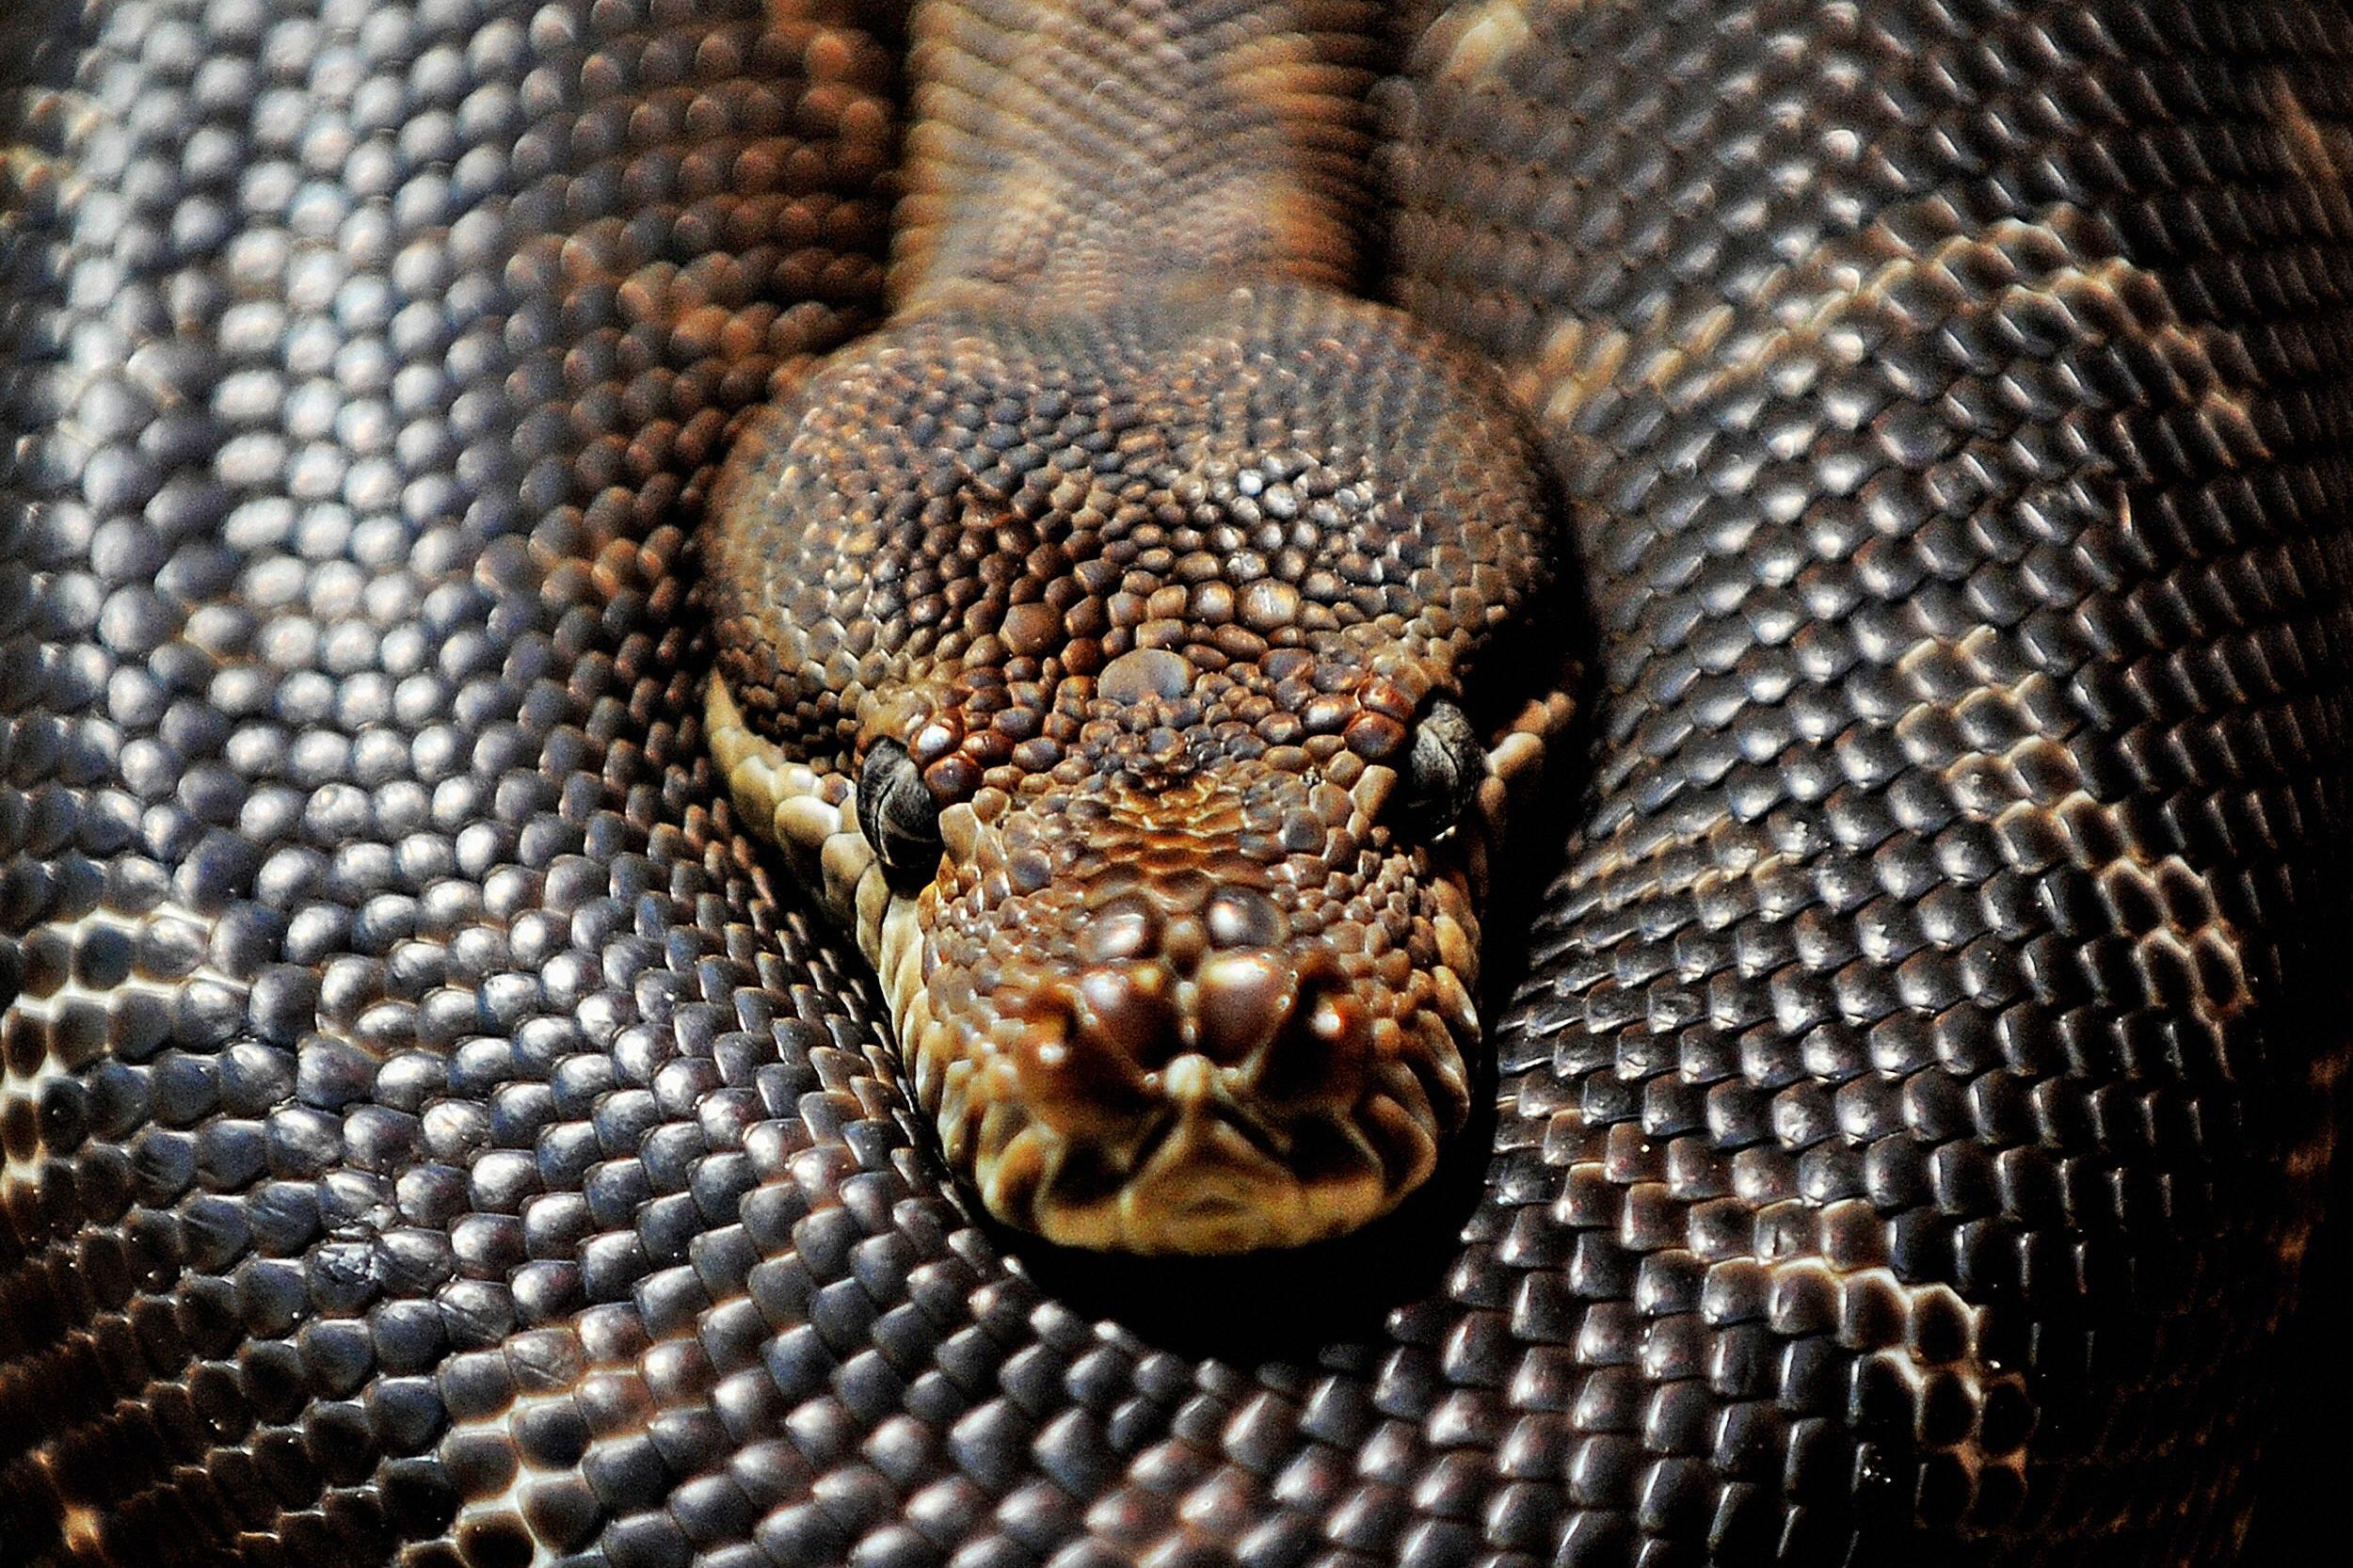 A balck-colored python lies coiled, its head toward the camera.